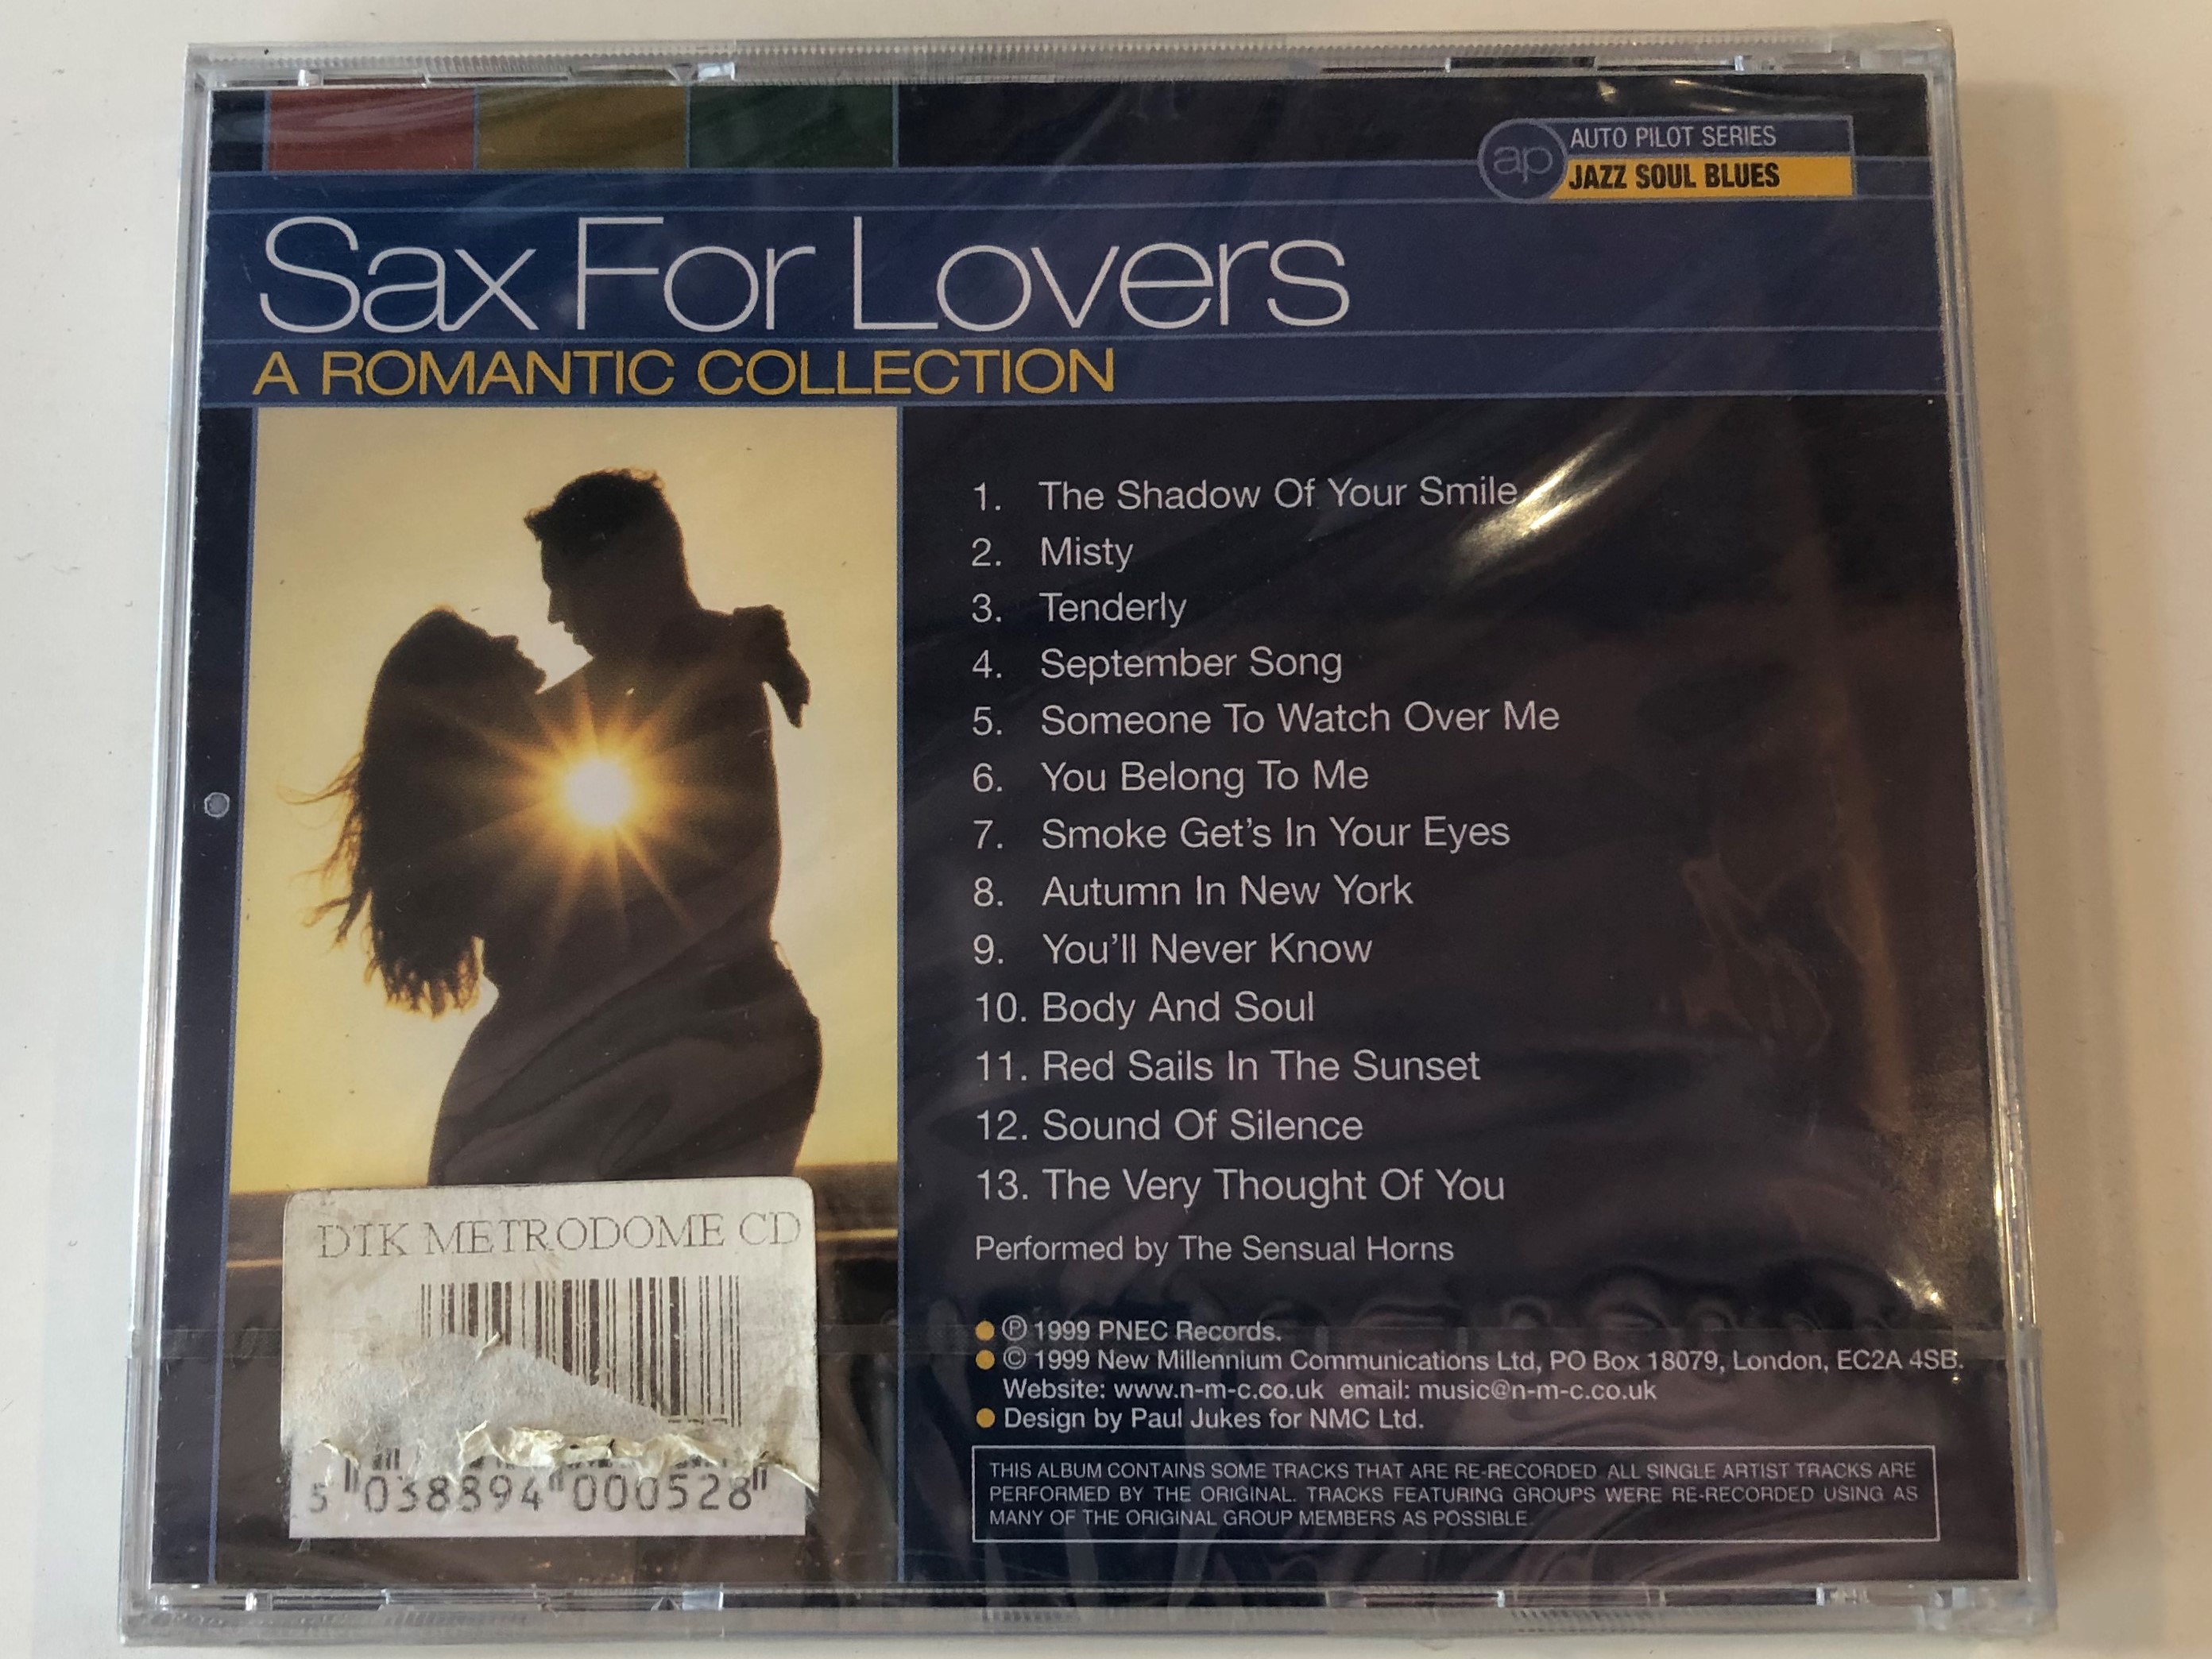 sax-for-lovers-a-romantic-collection-auto-pilot-series.-jazz-soul-blues-pnec-records-audio-cd-1999-5038894000528-2-.jpg